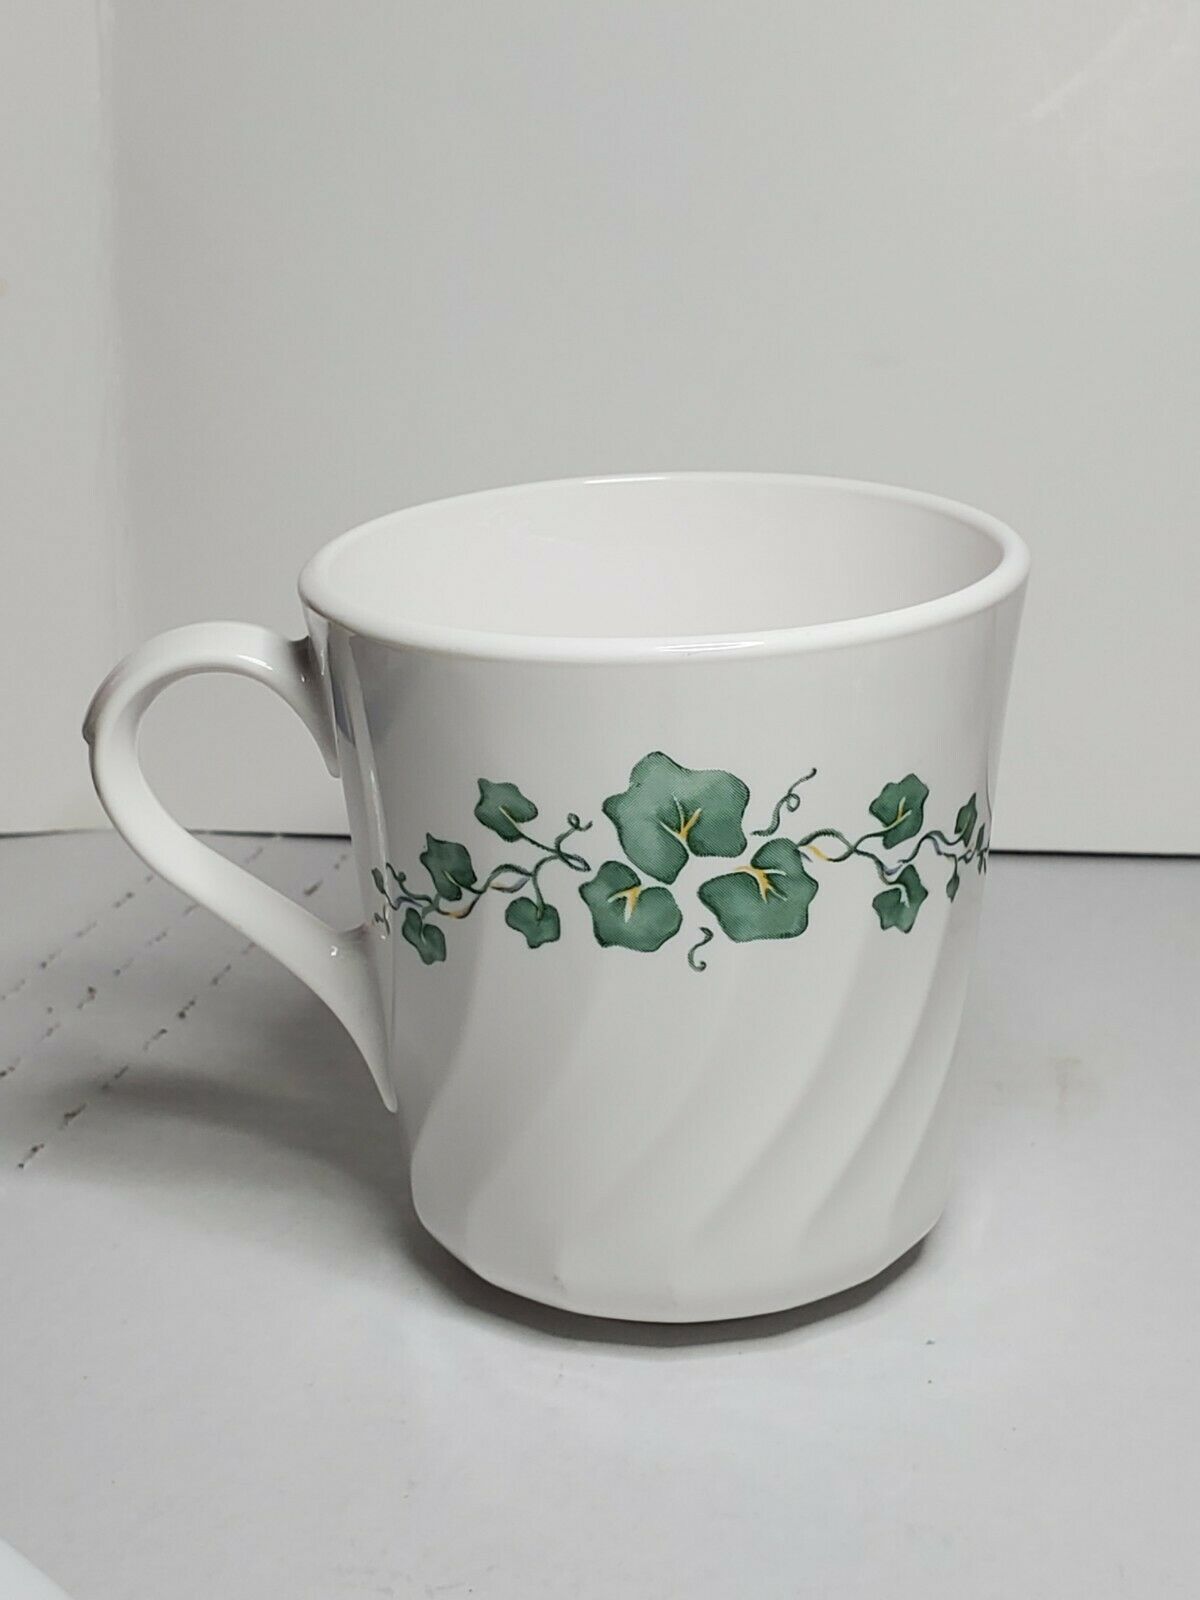 Corelle Corning Callaway Ivy Swirl Coffee Tea Mug Cup Vintage Green Ivy Ribbed